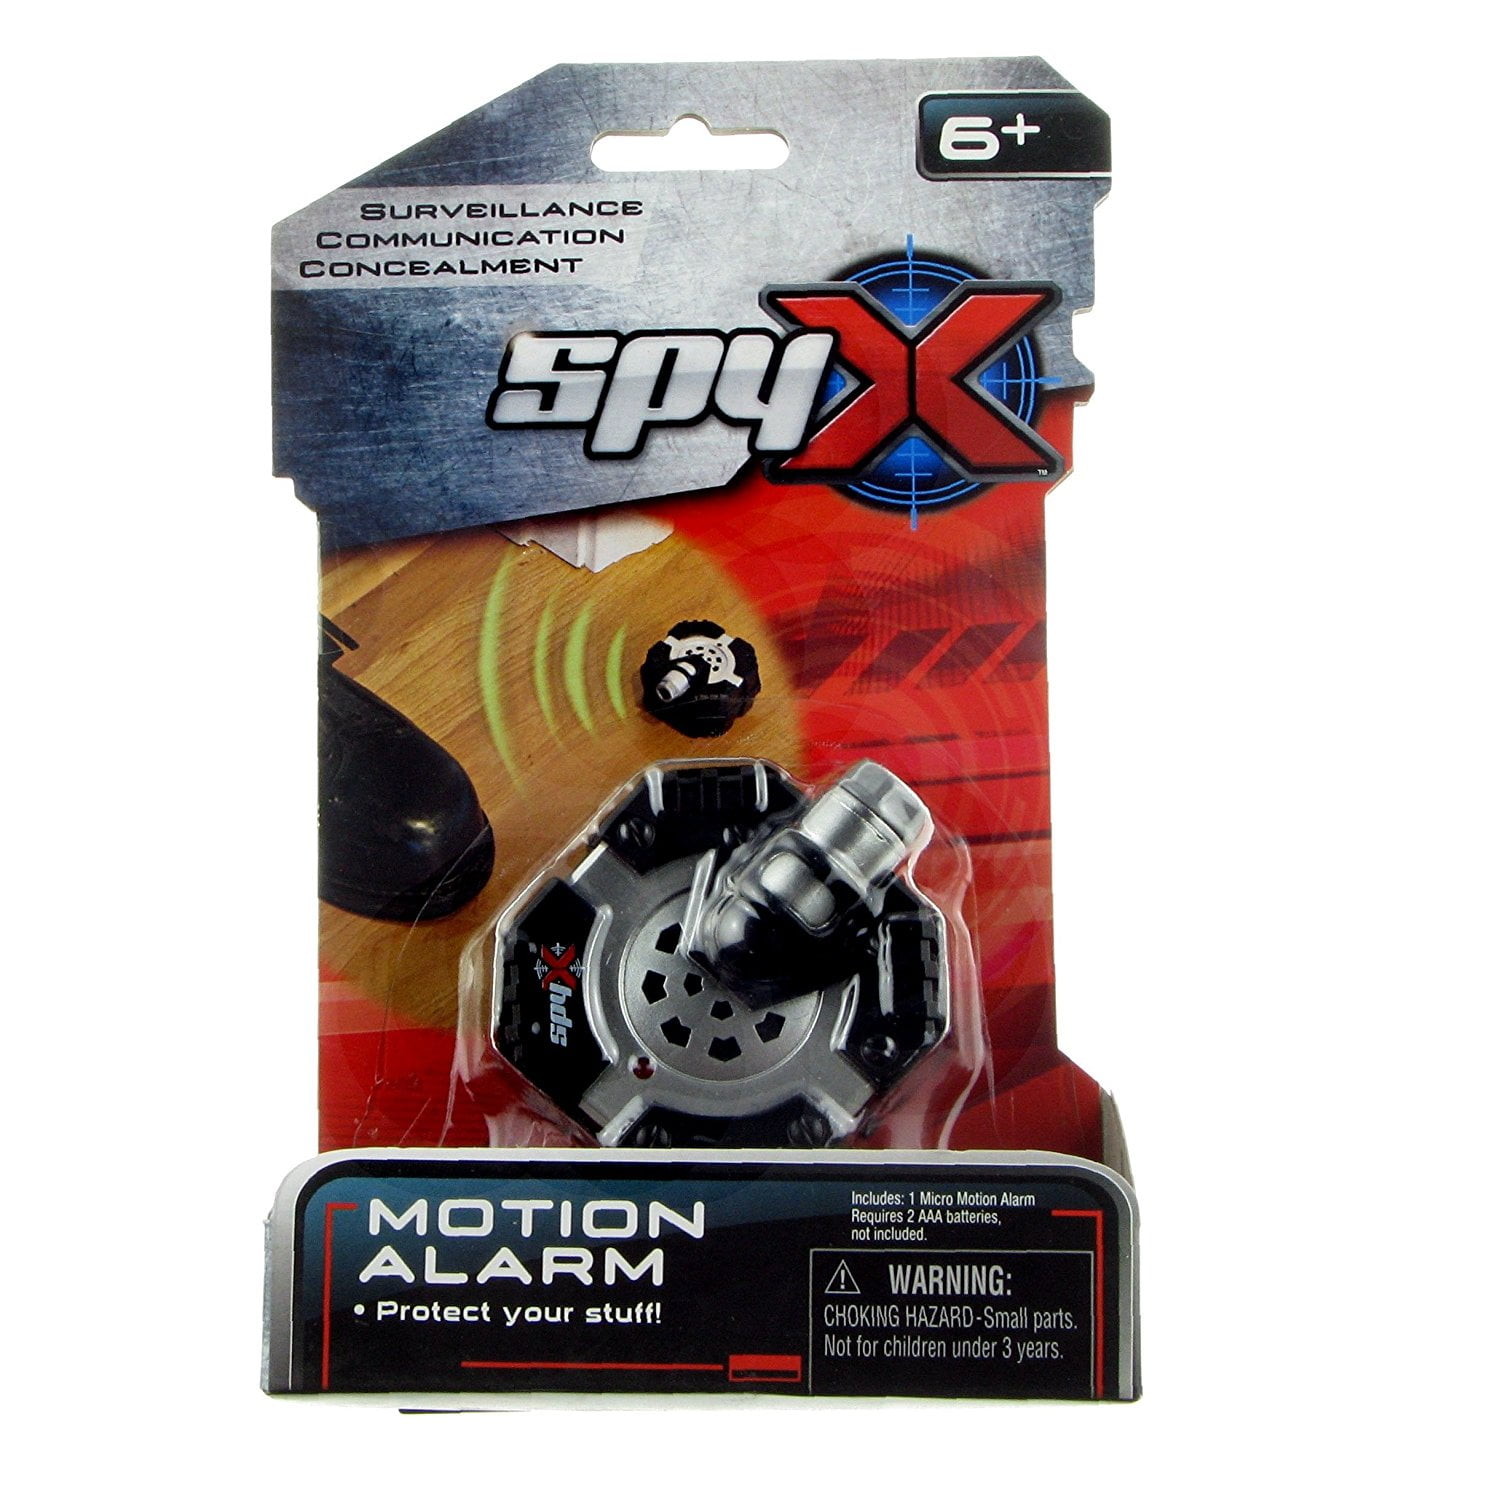 Details about   Spy X DIY Motion Alarm 